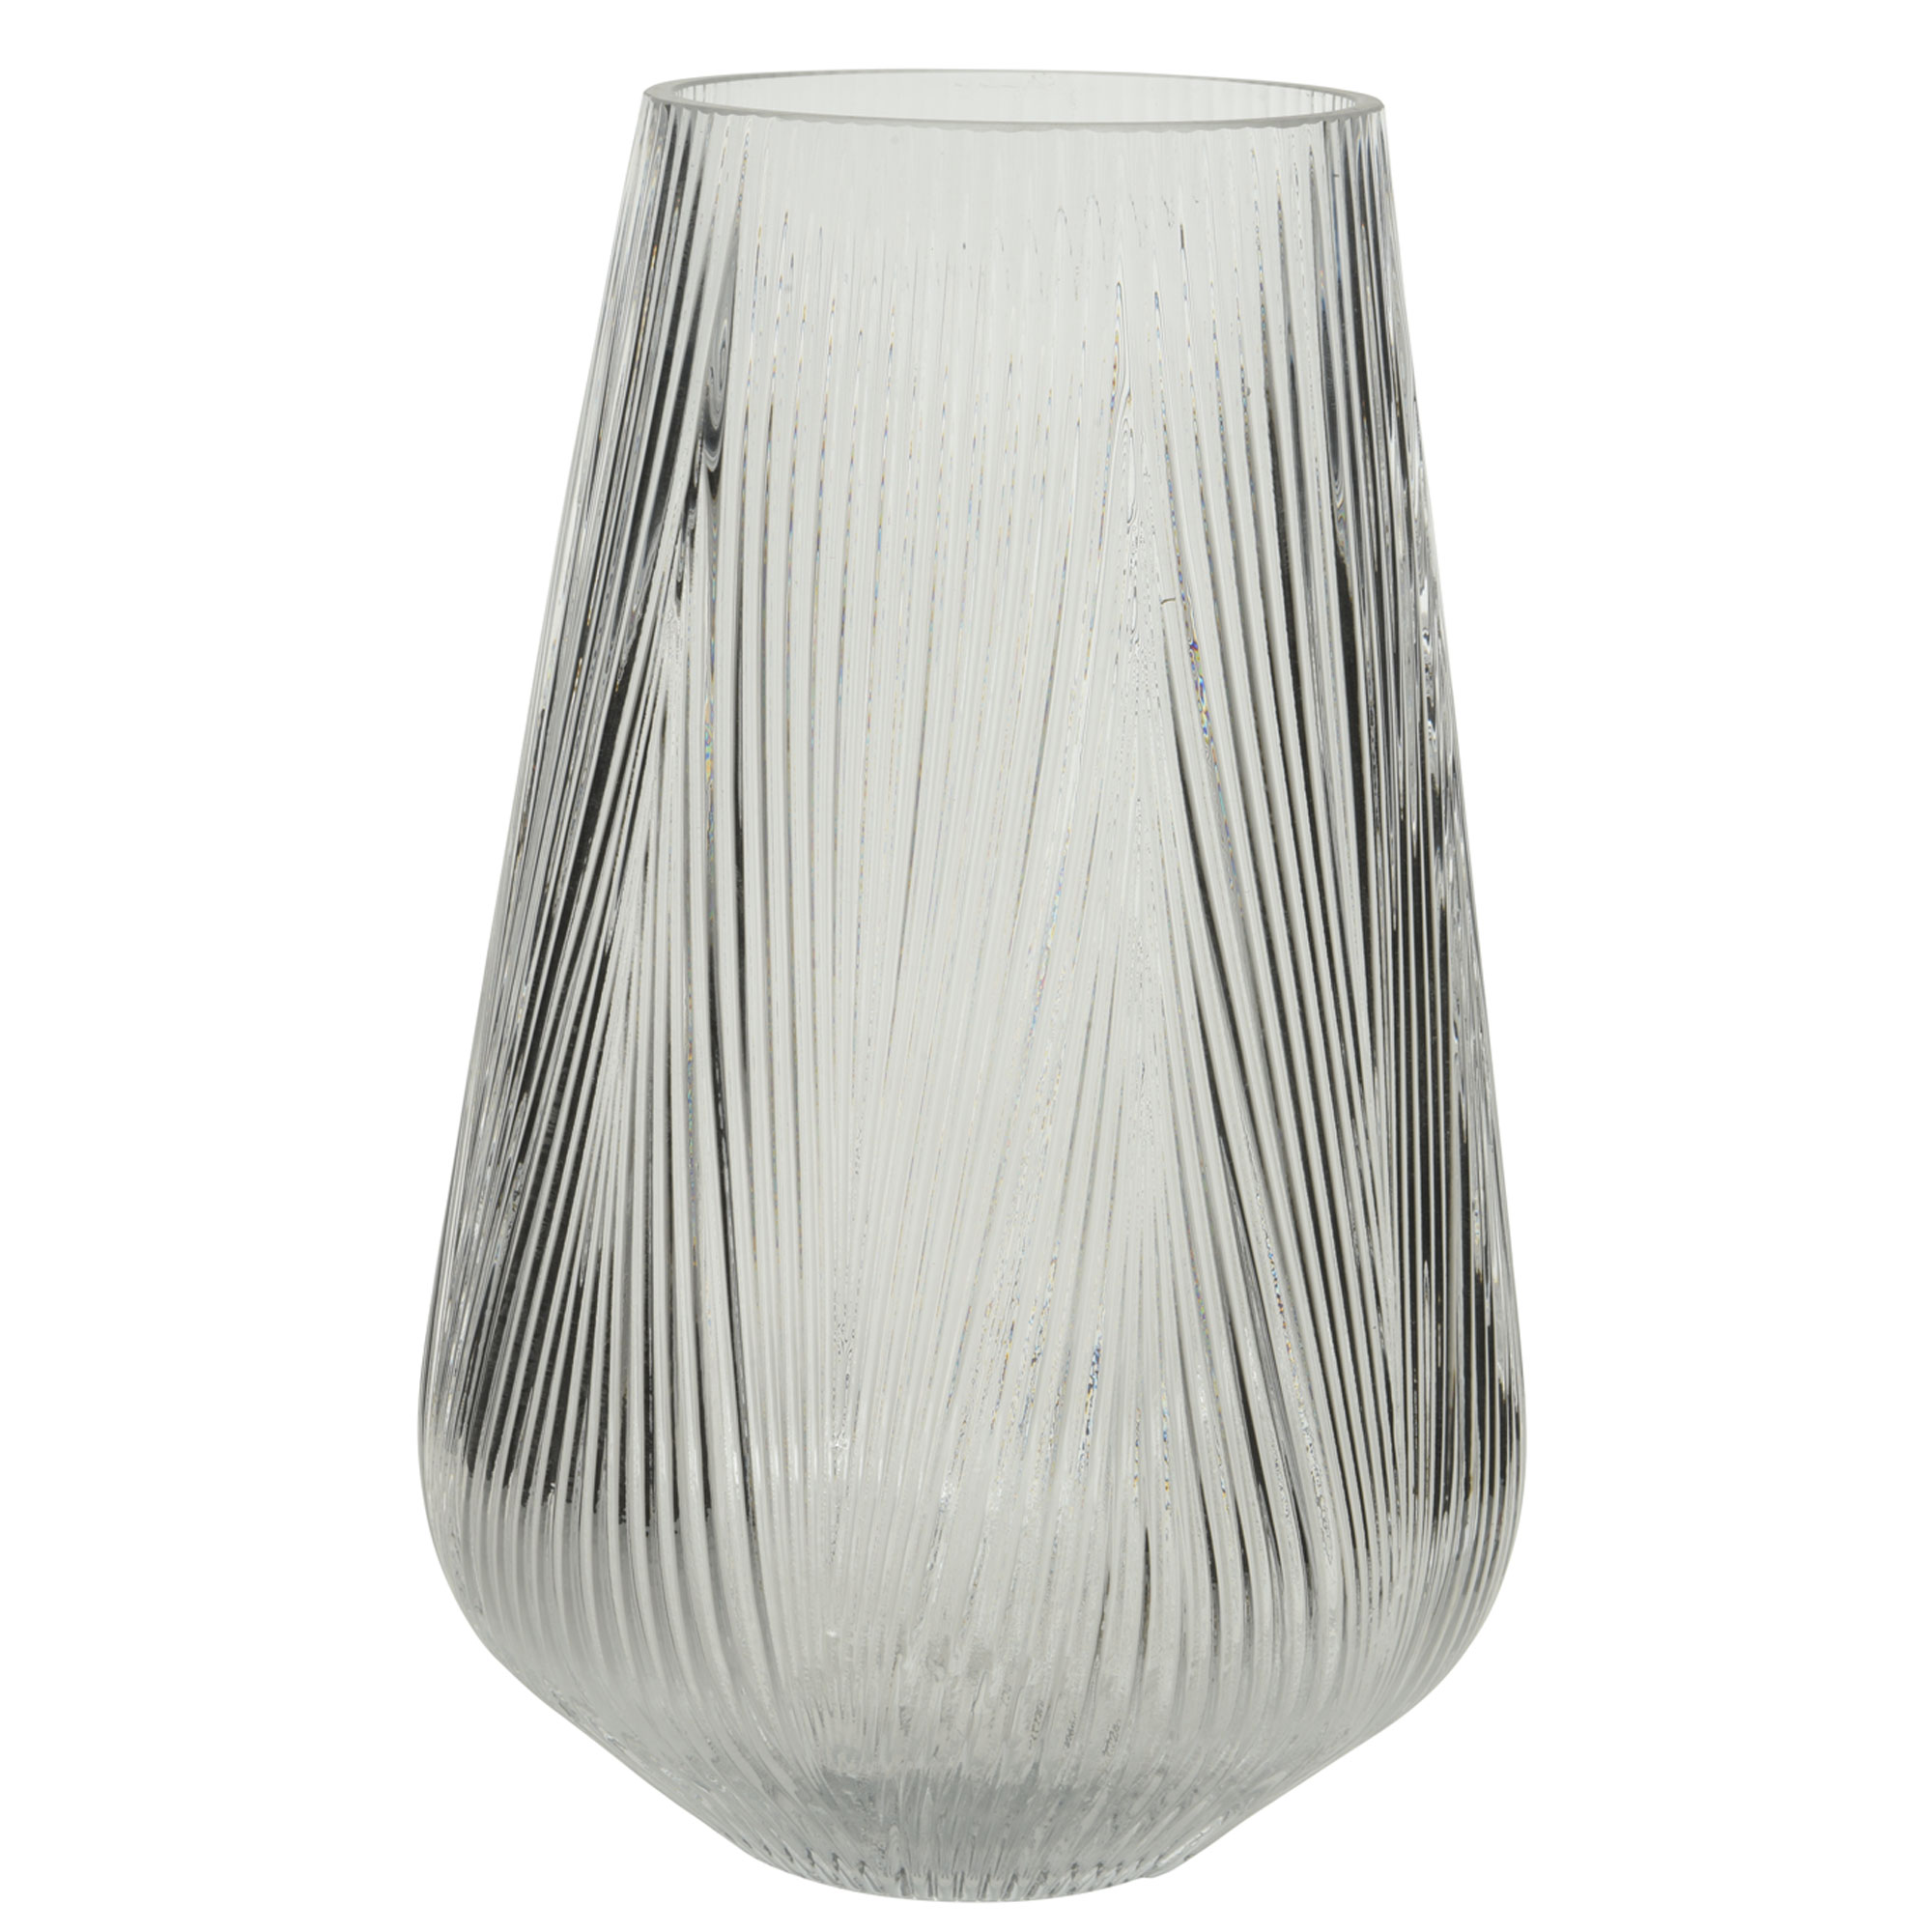 Etched Glass Vase, Neutral | Barker & Stonehouse